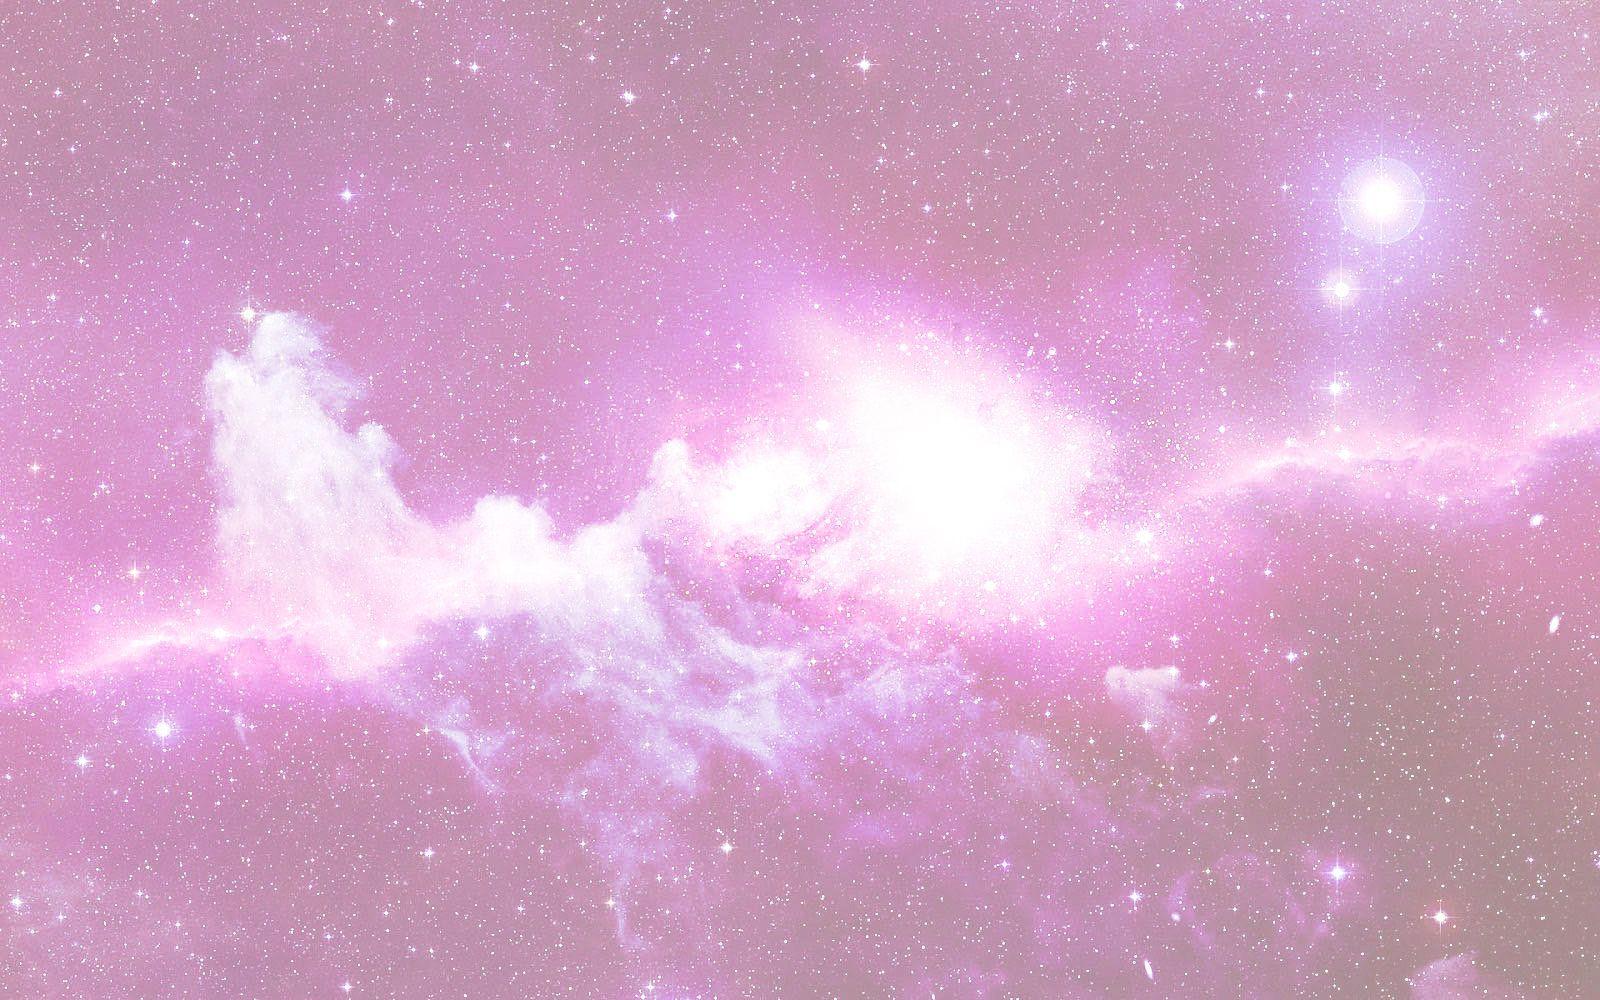 Galaxy Background Pastel Purple